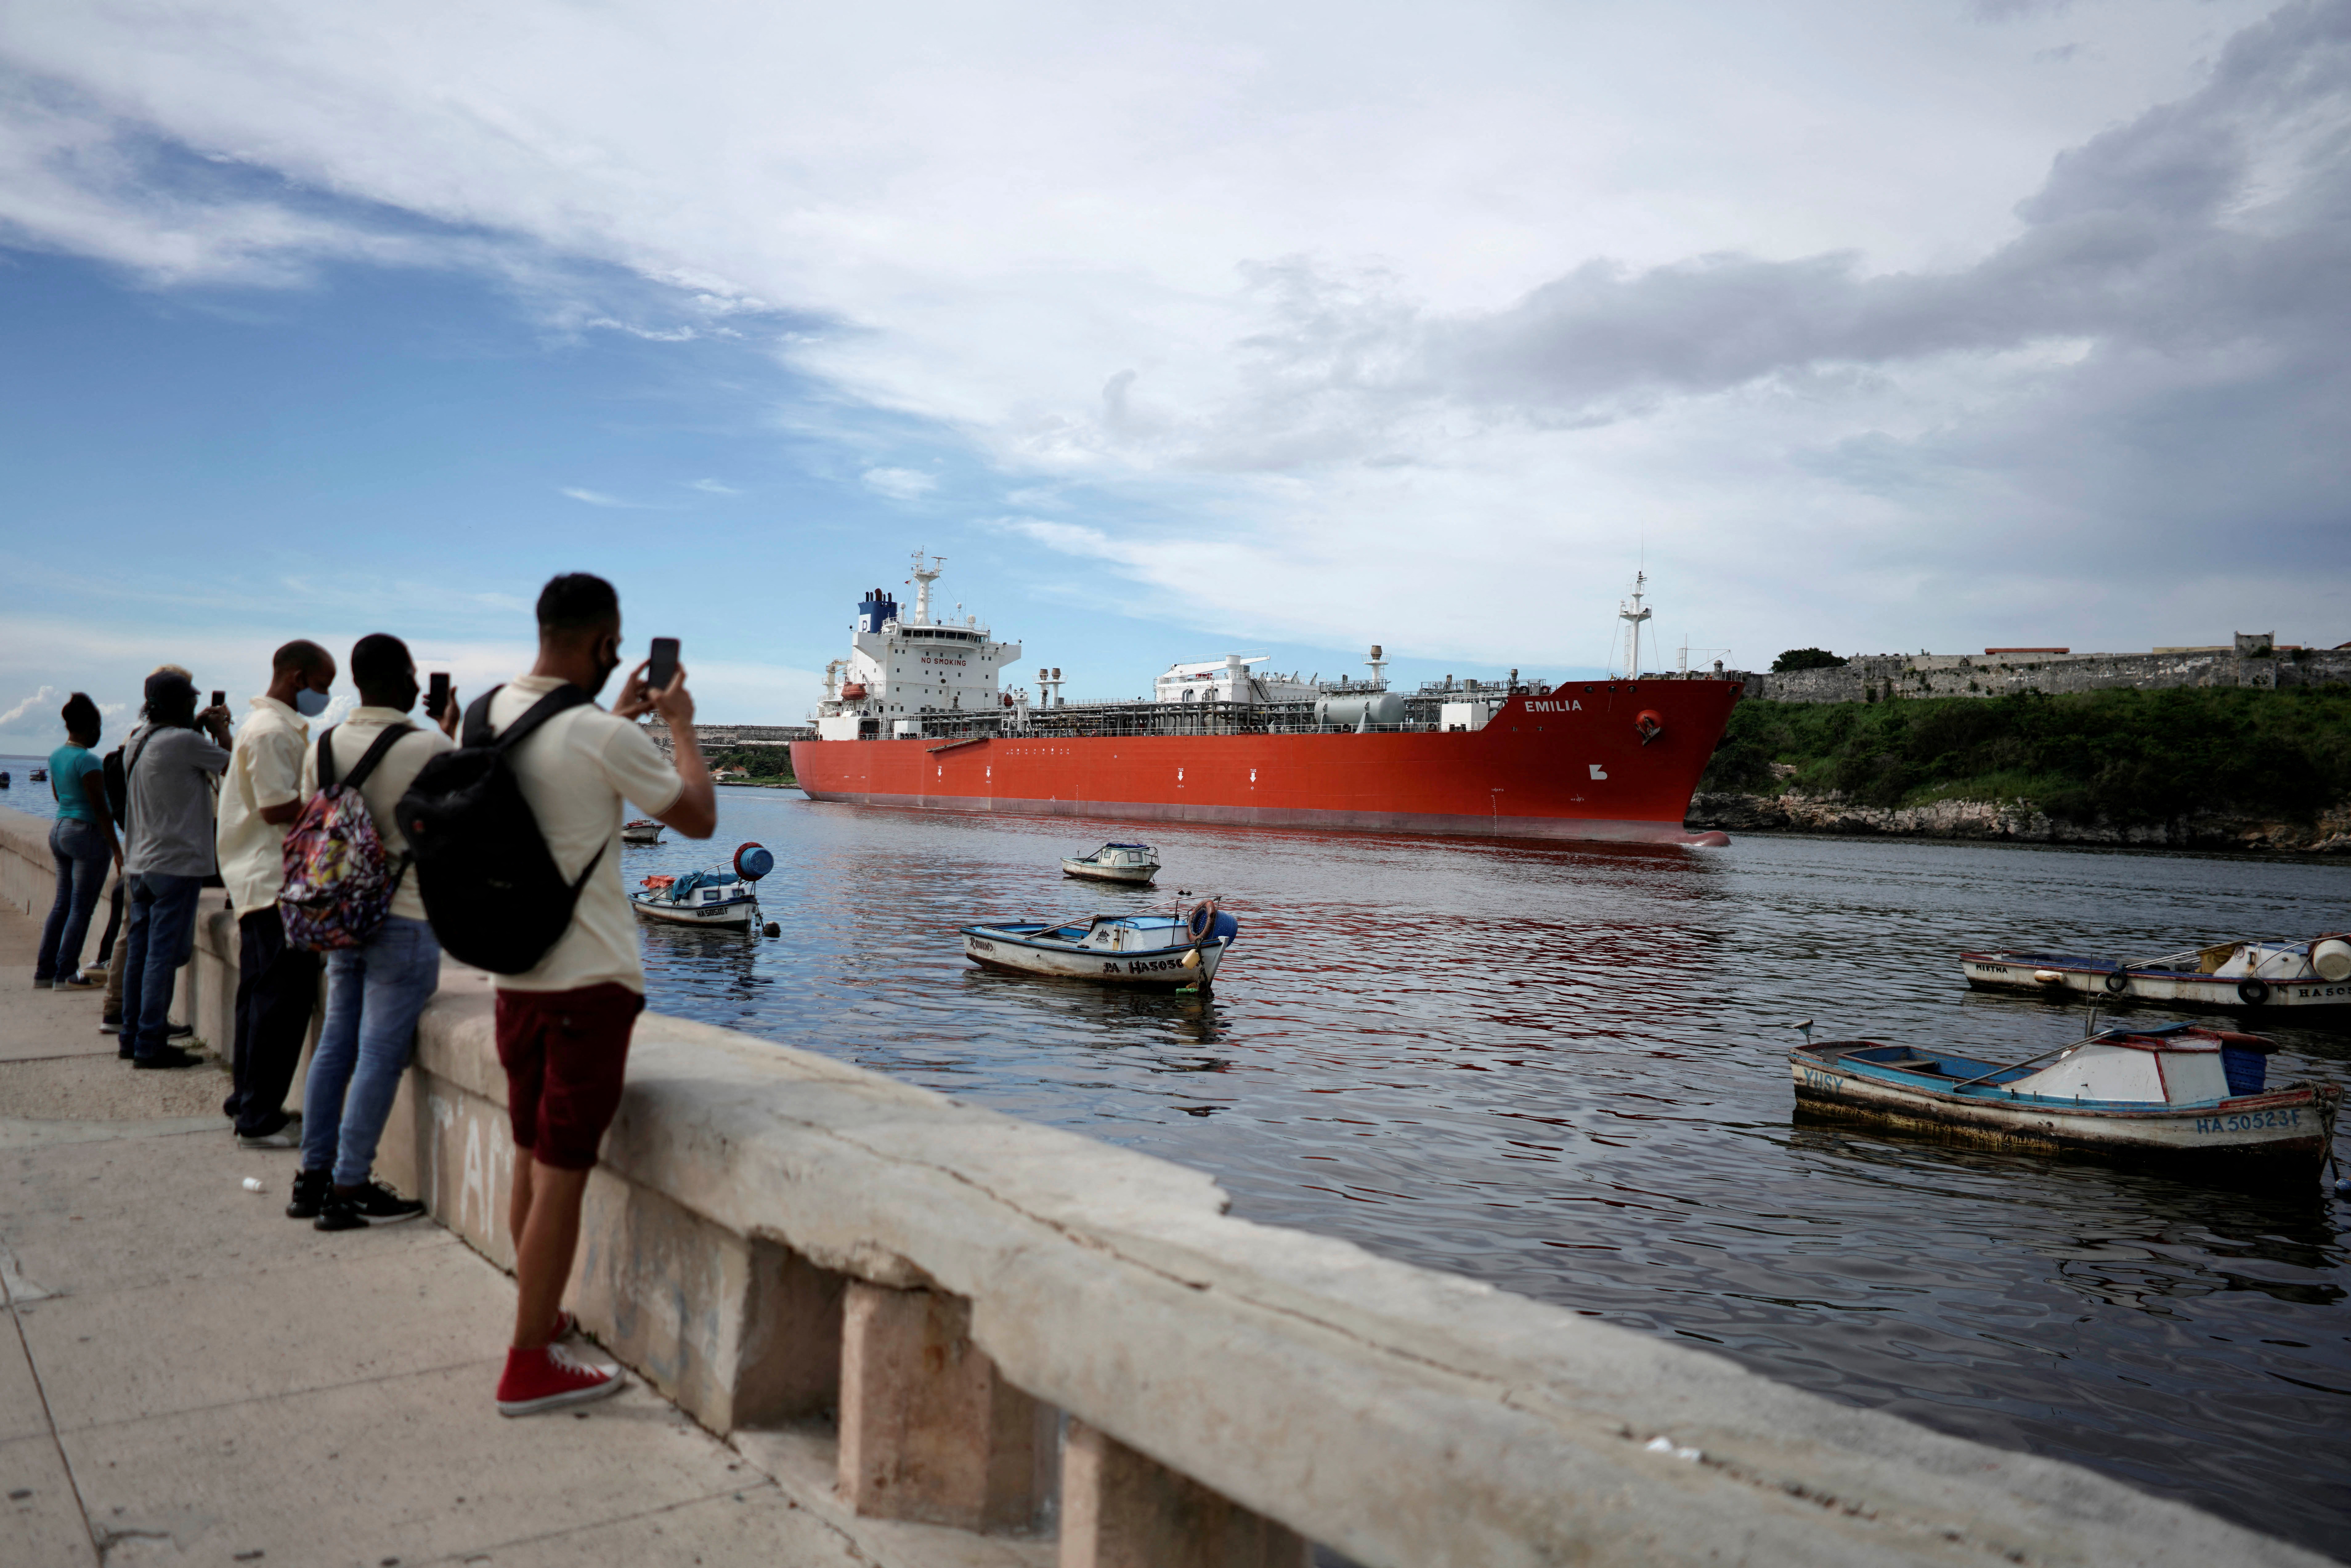 People take pictures of a tanker entering Havana's bay in Cuba